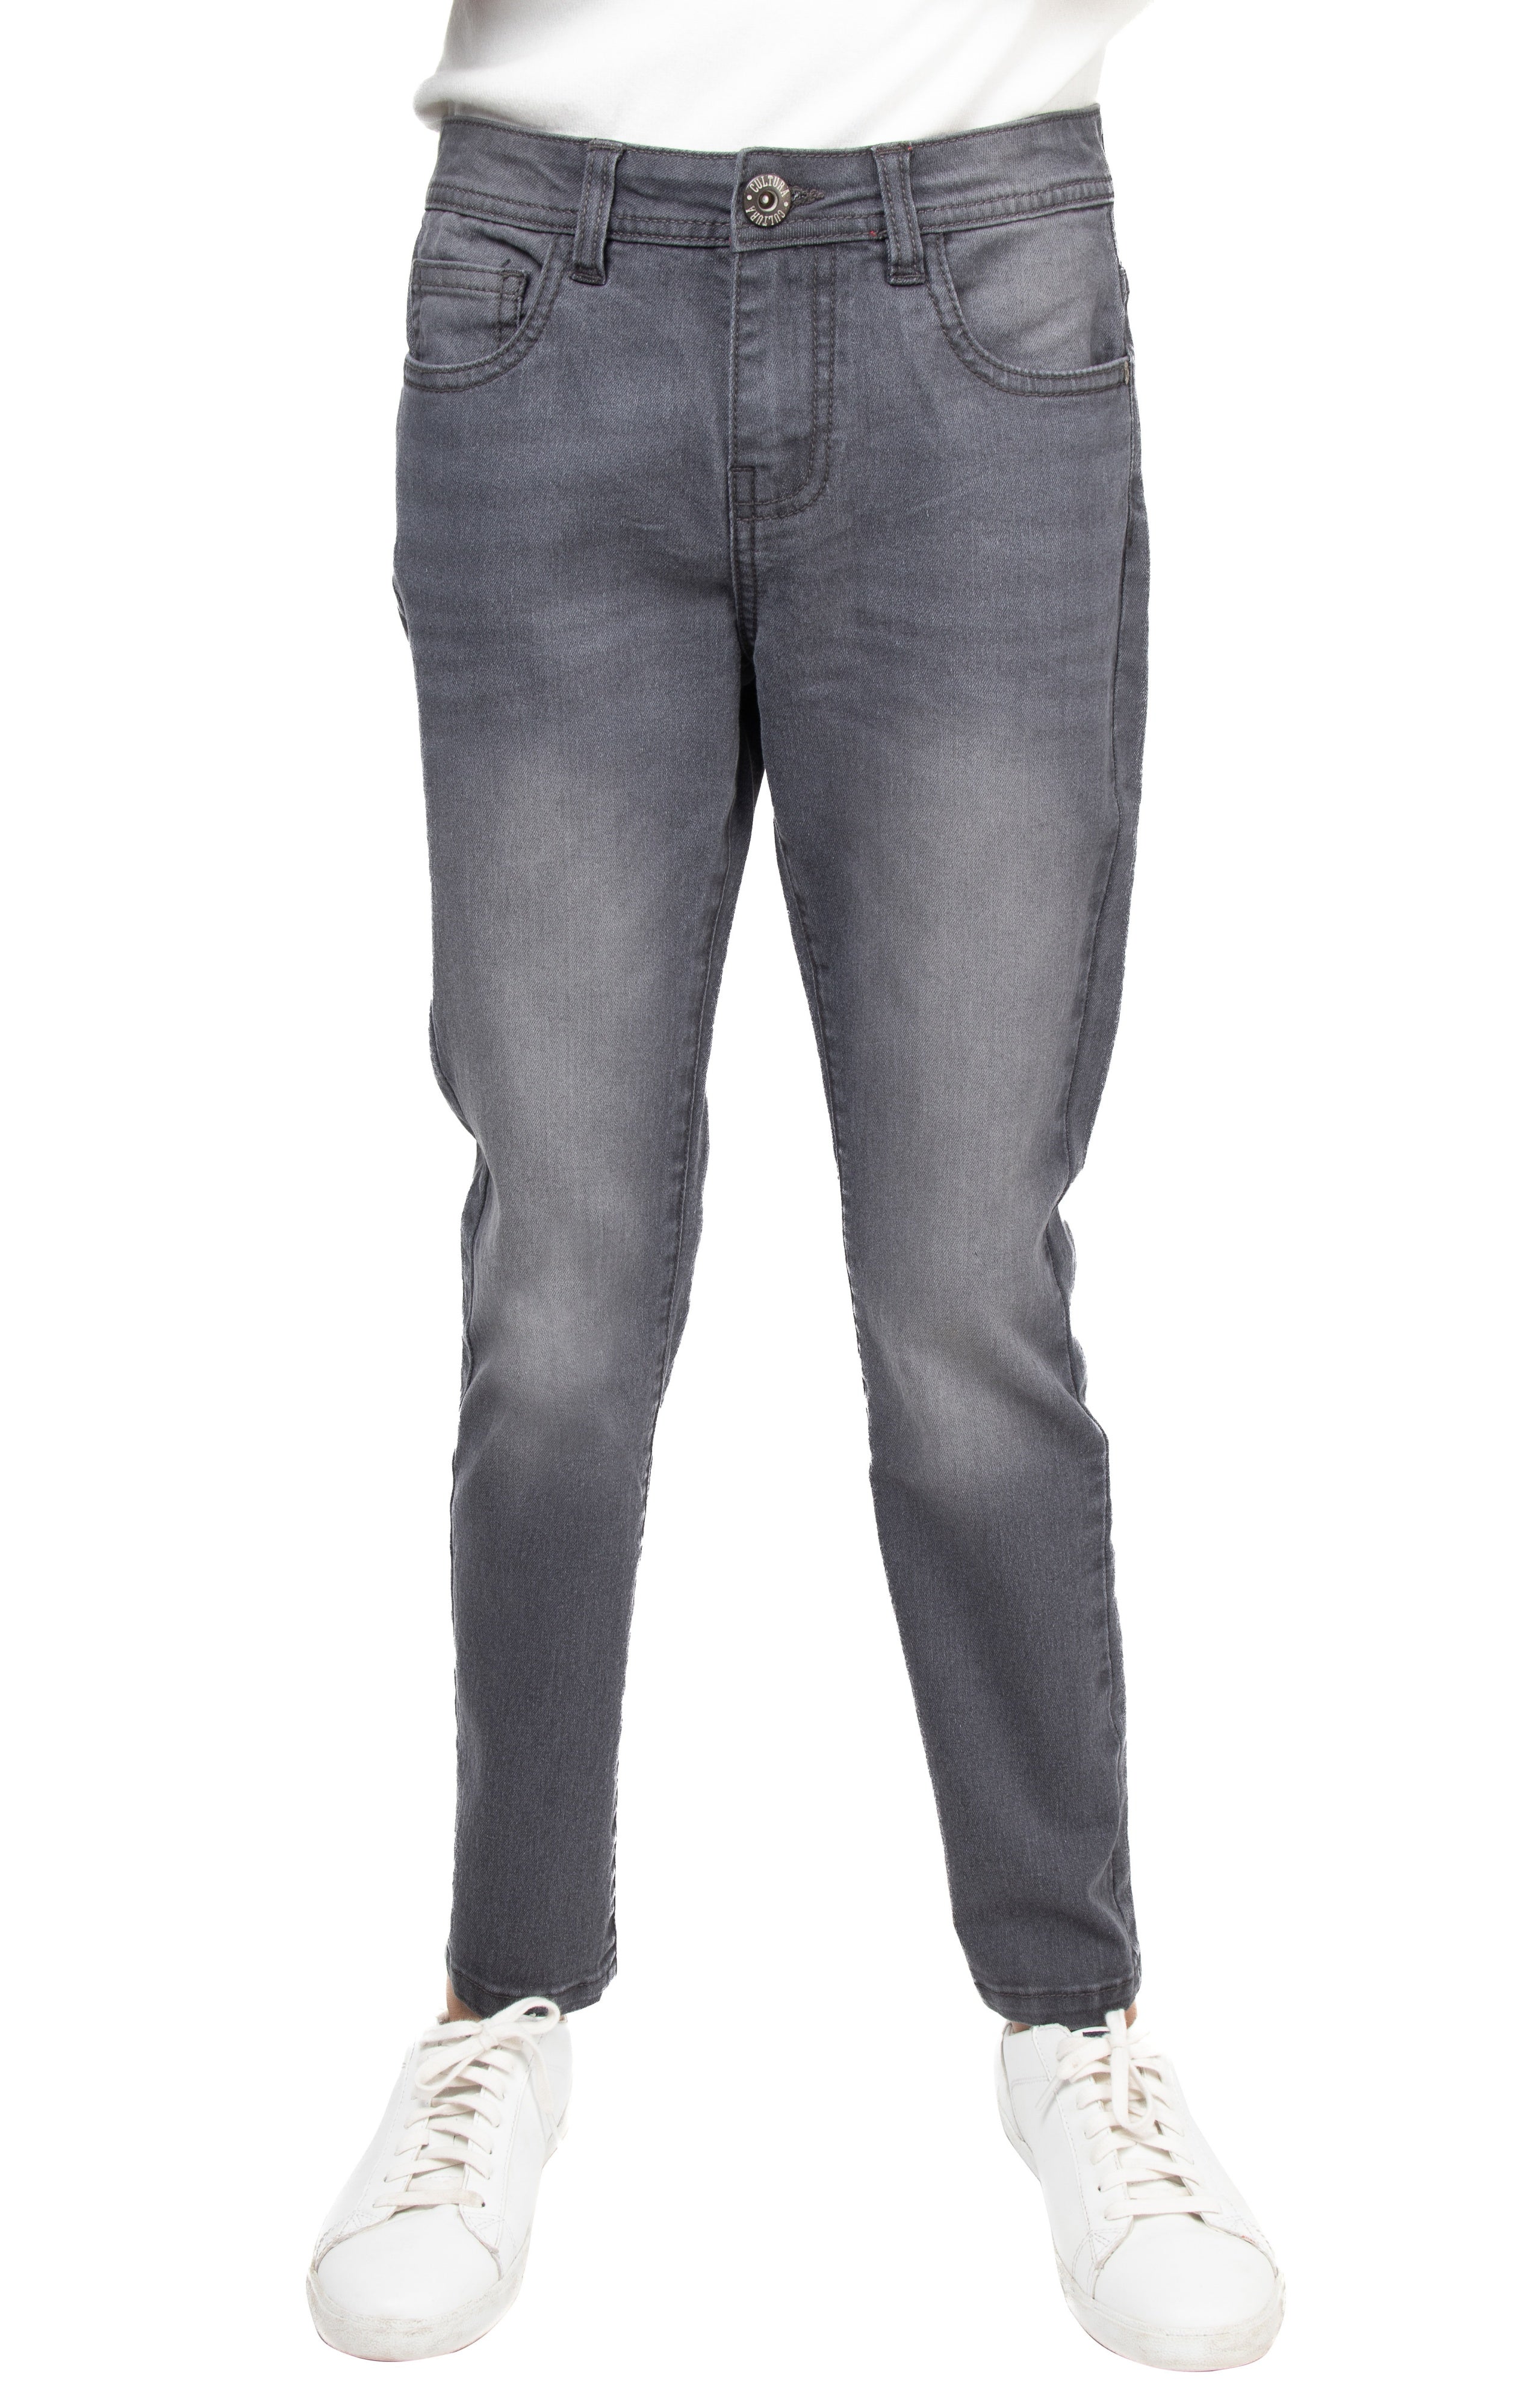 Best Grey Jeans For Men - Denimology